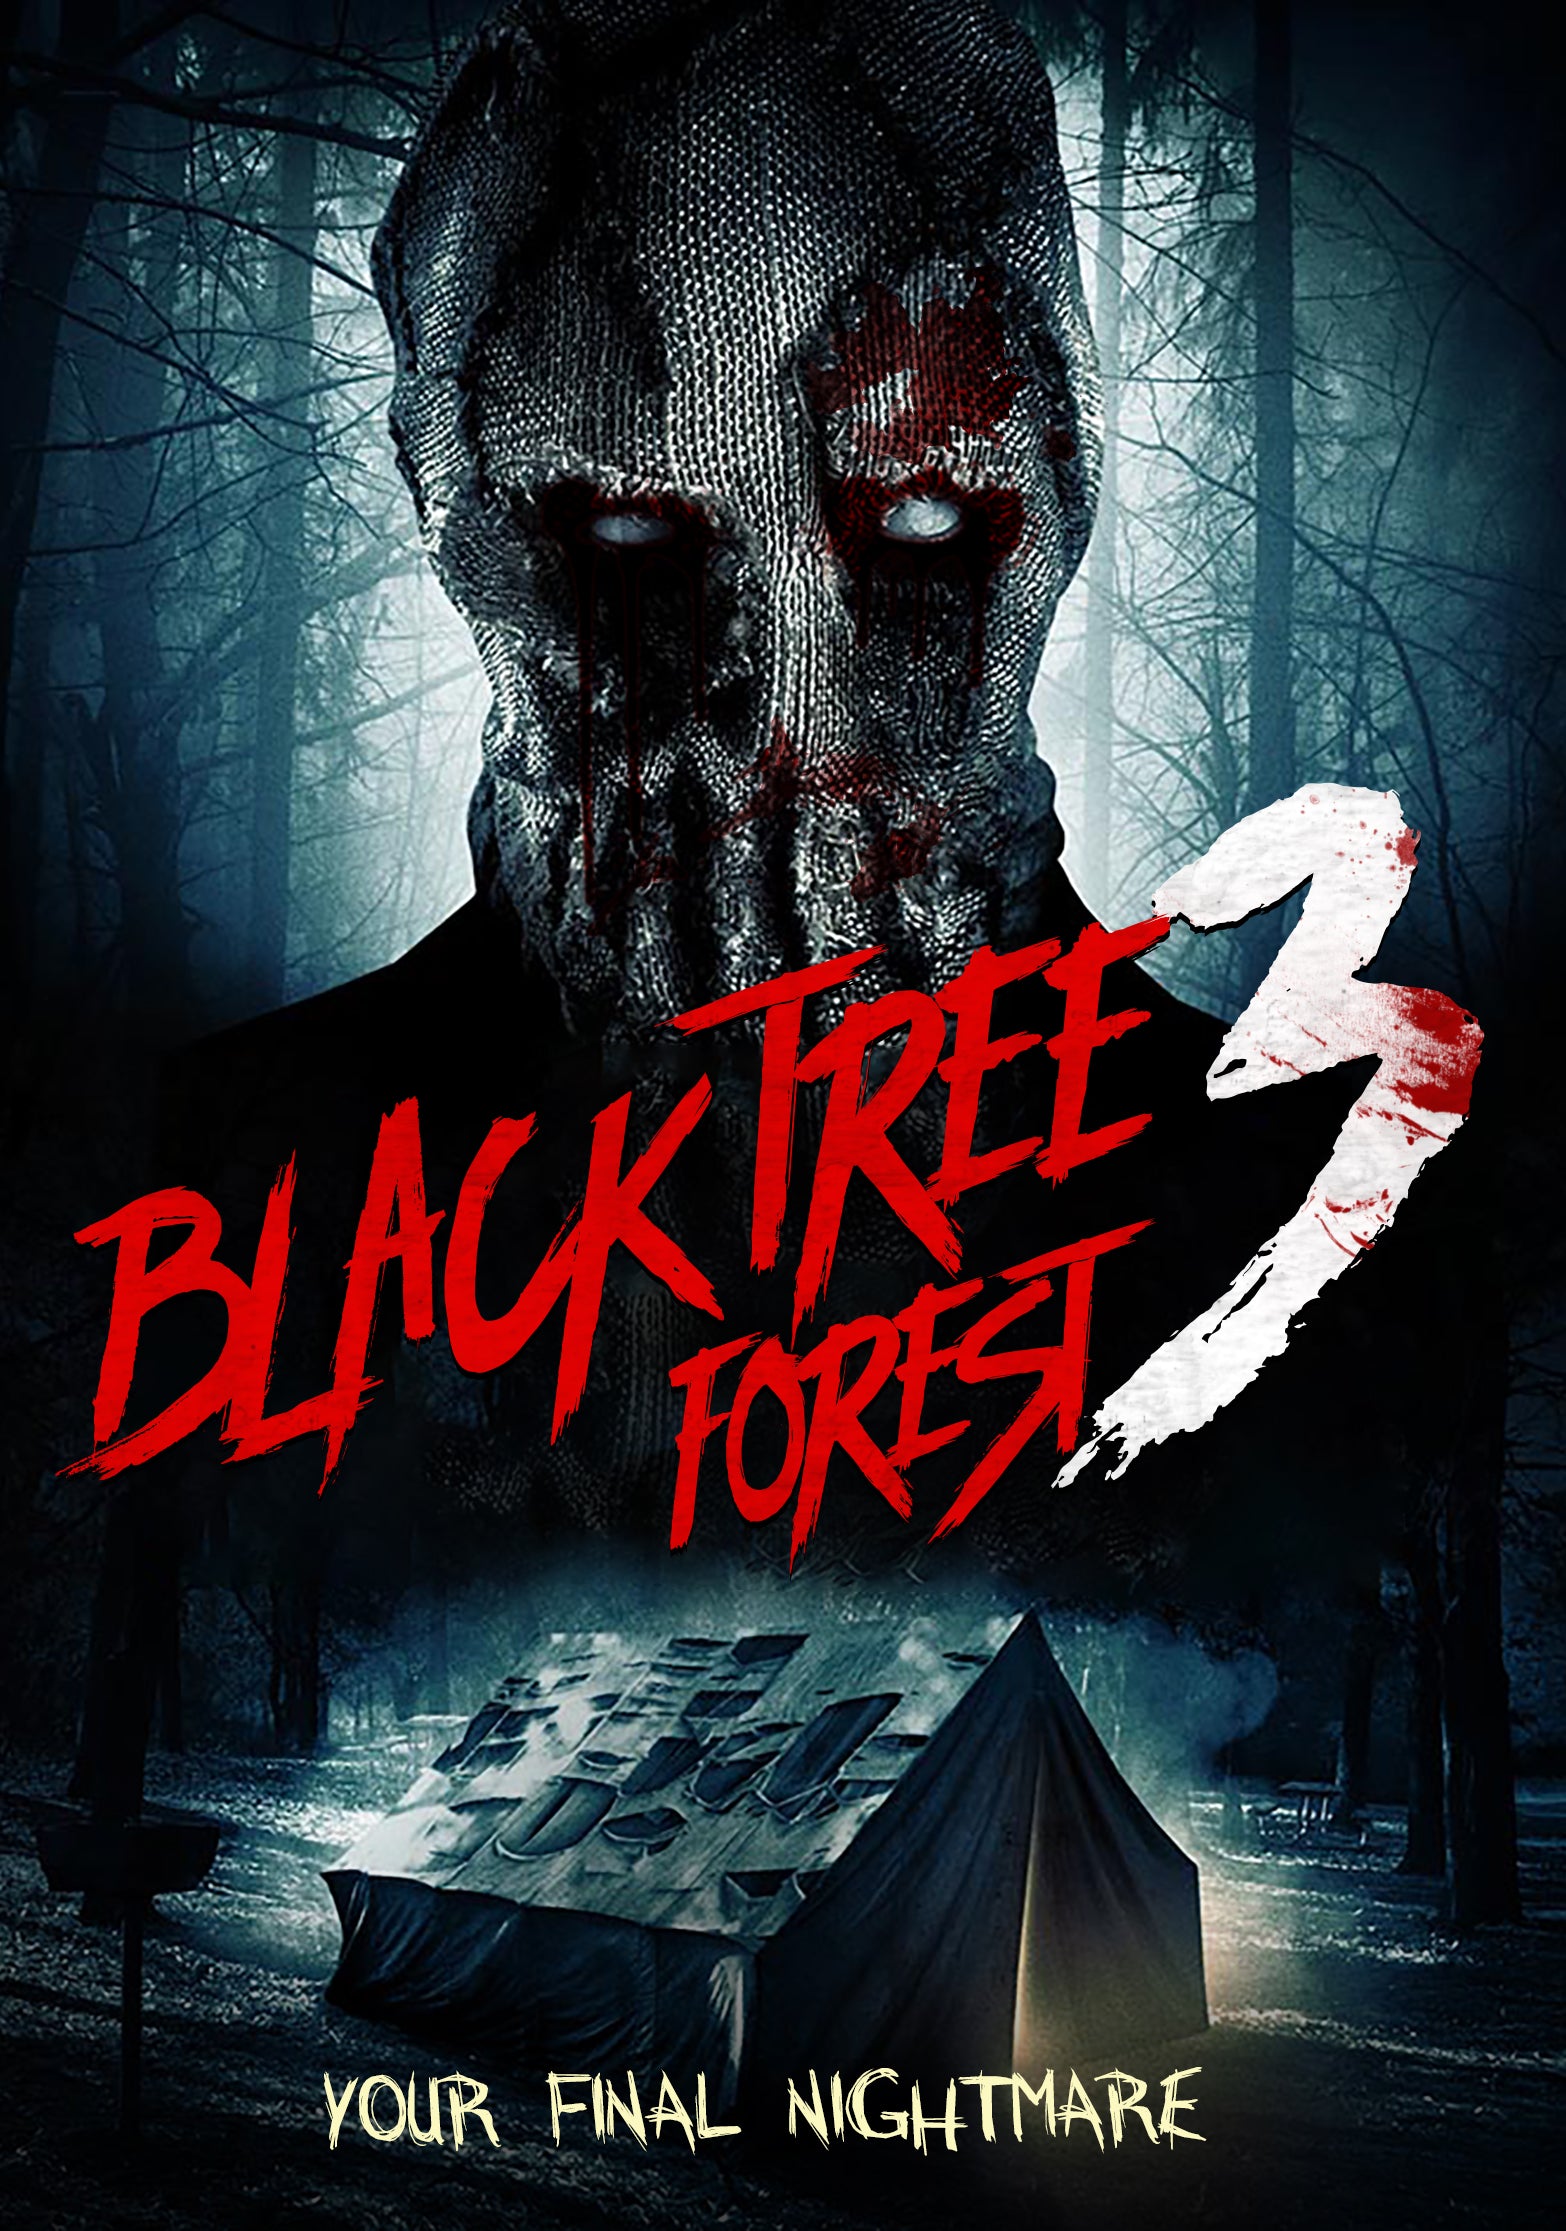 BLACK TREE FOREST 3 DVD